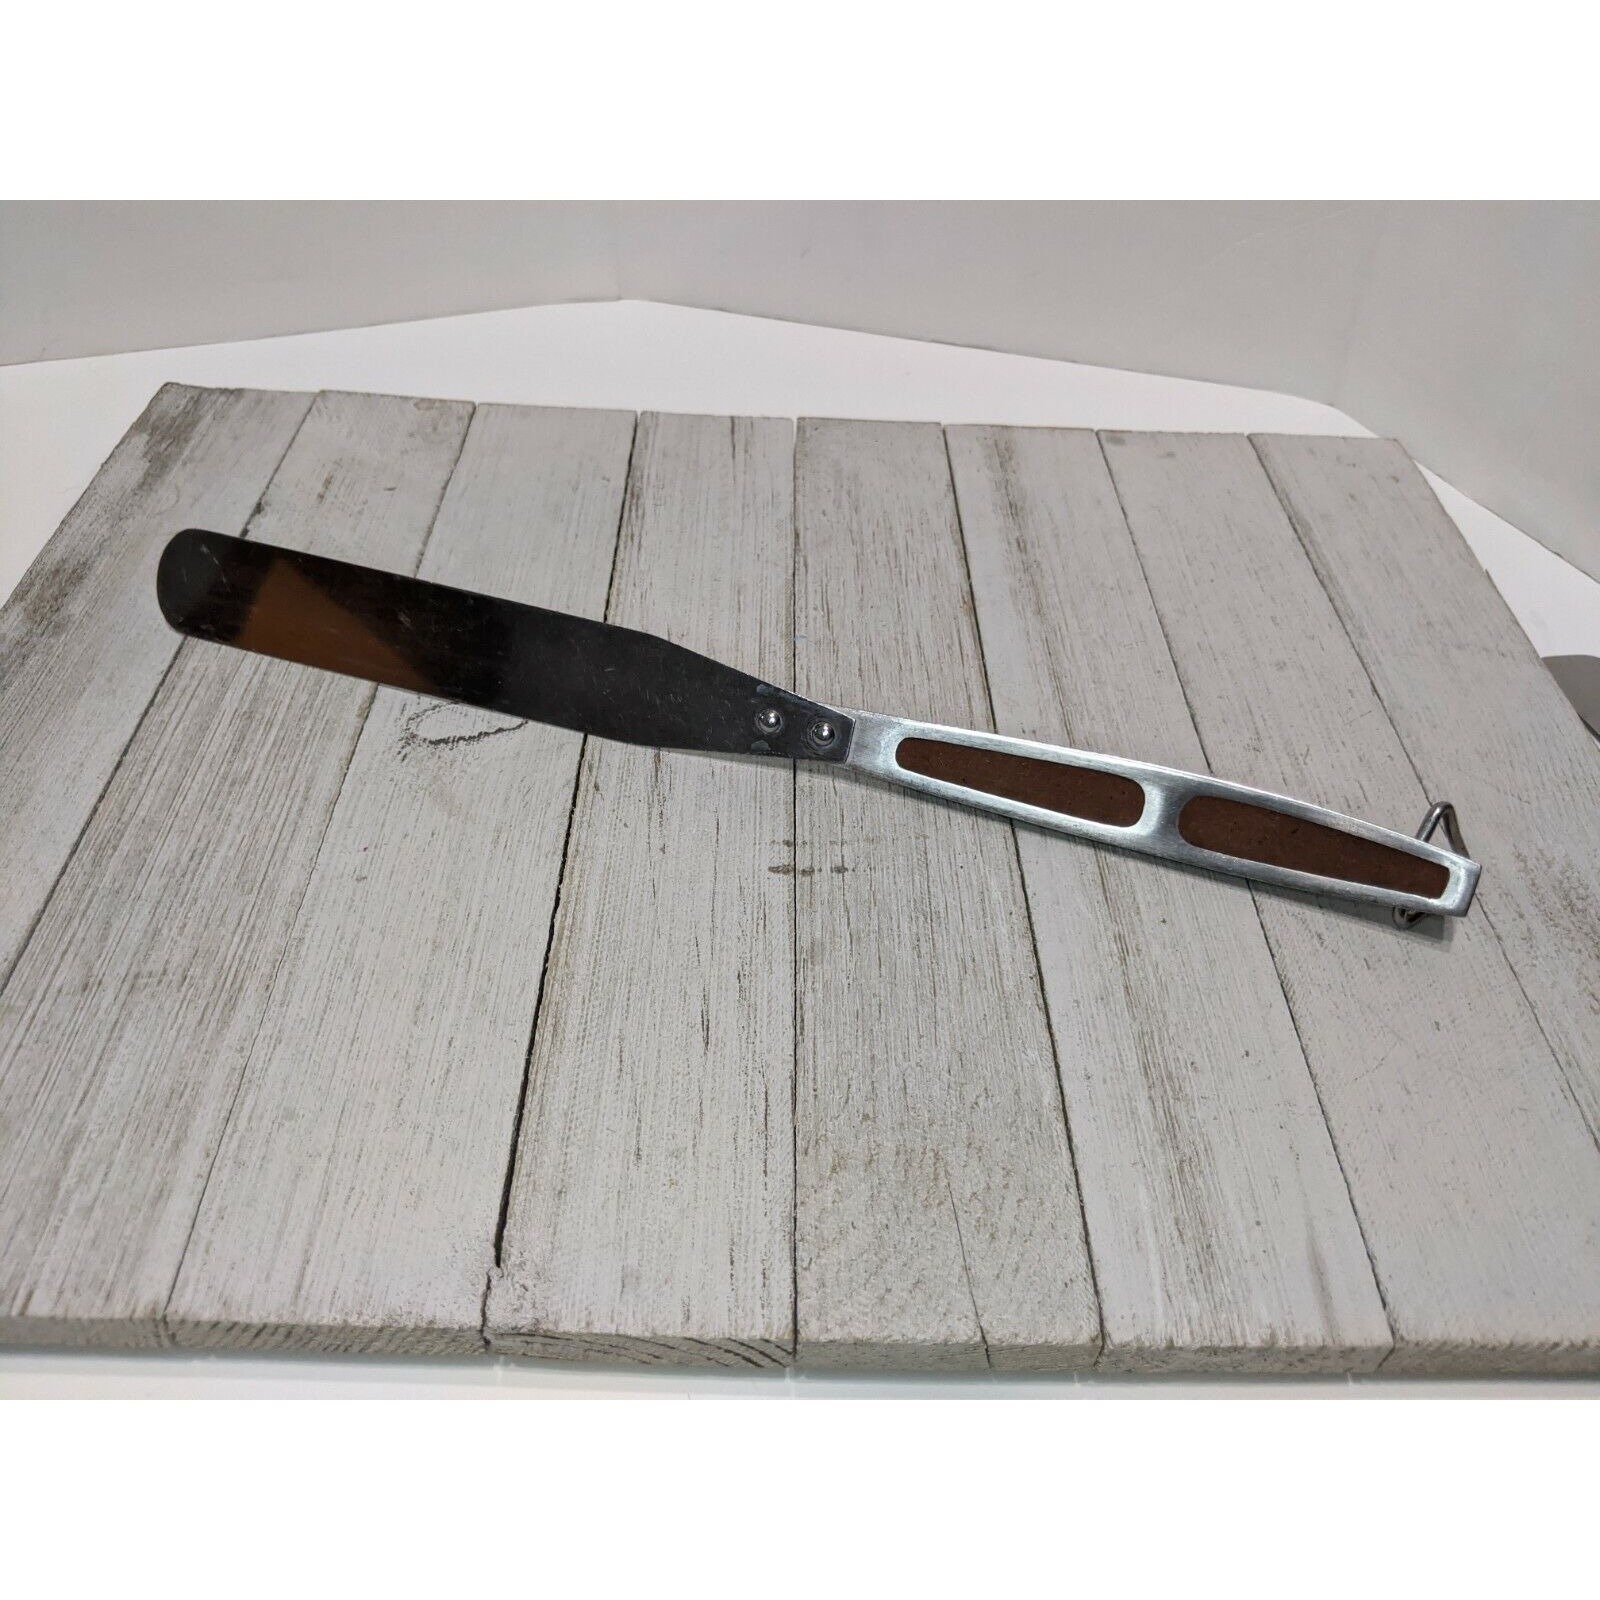 Dexter 6 x 1 frosting spatula-S2496